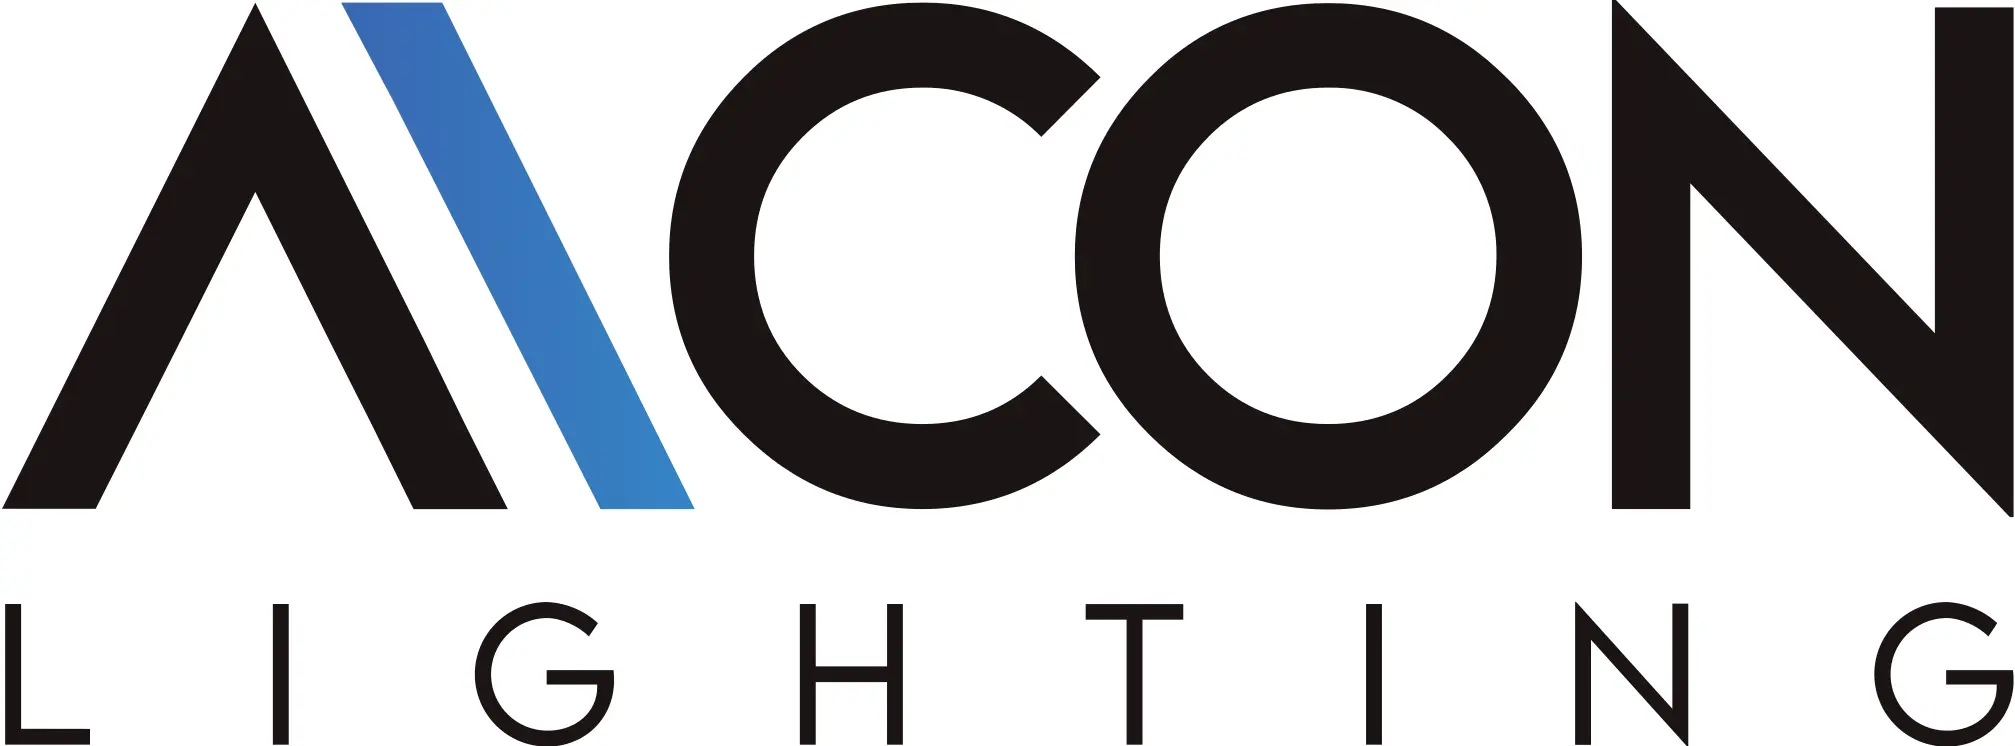 Logotipo de iluminación Alcon